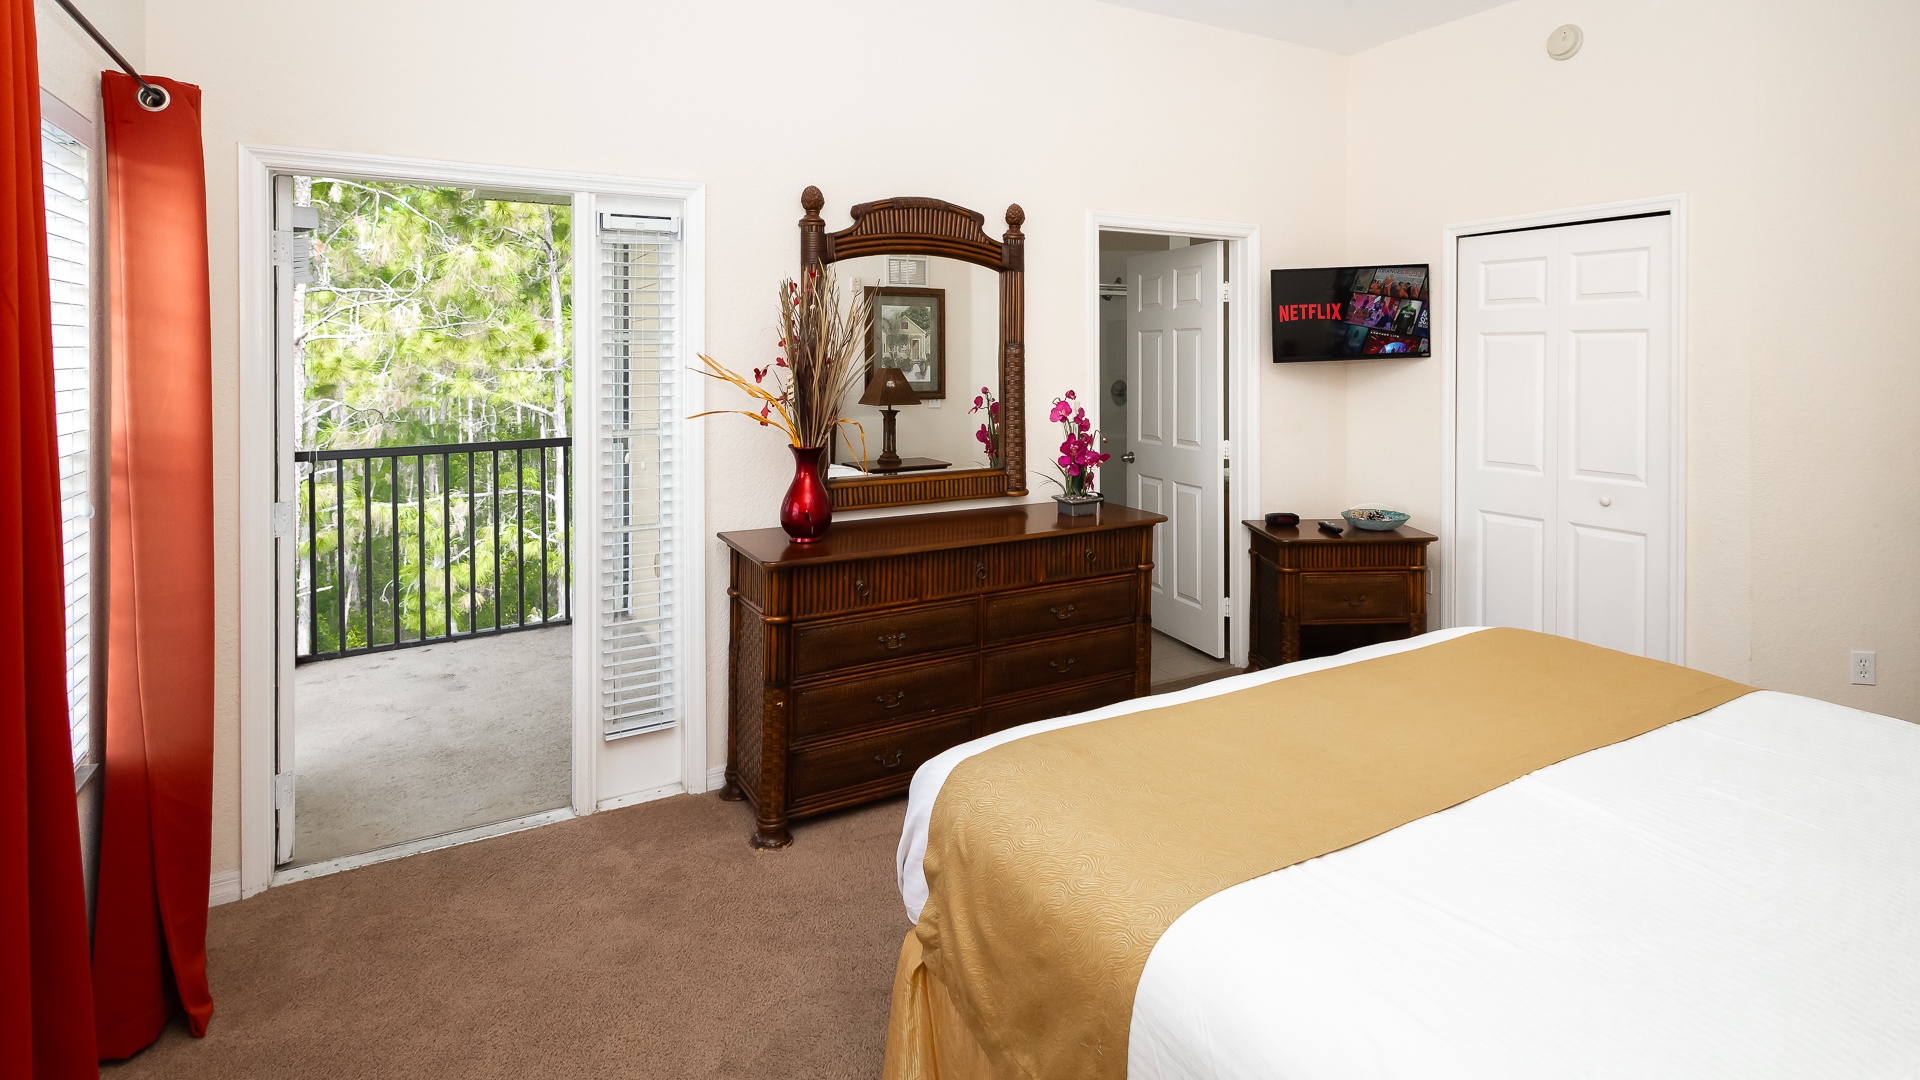 The regal king suite boasts a private en suite, TV, & balcony access